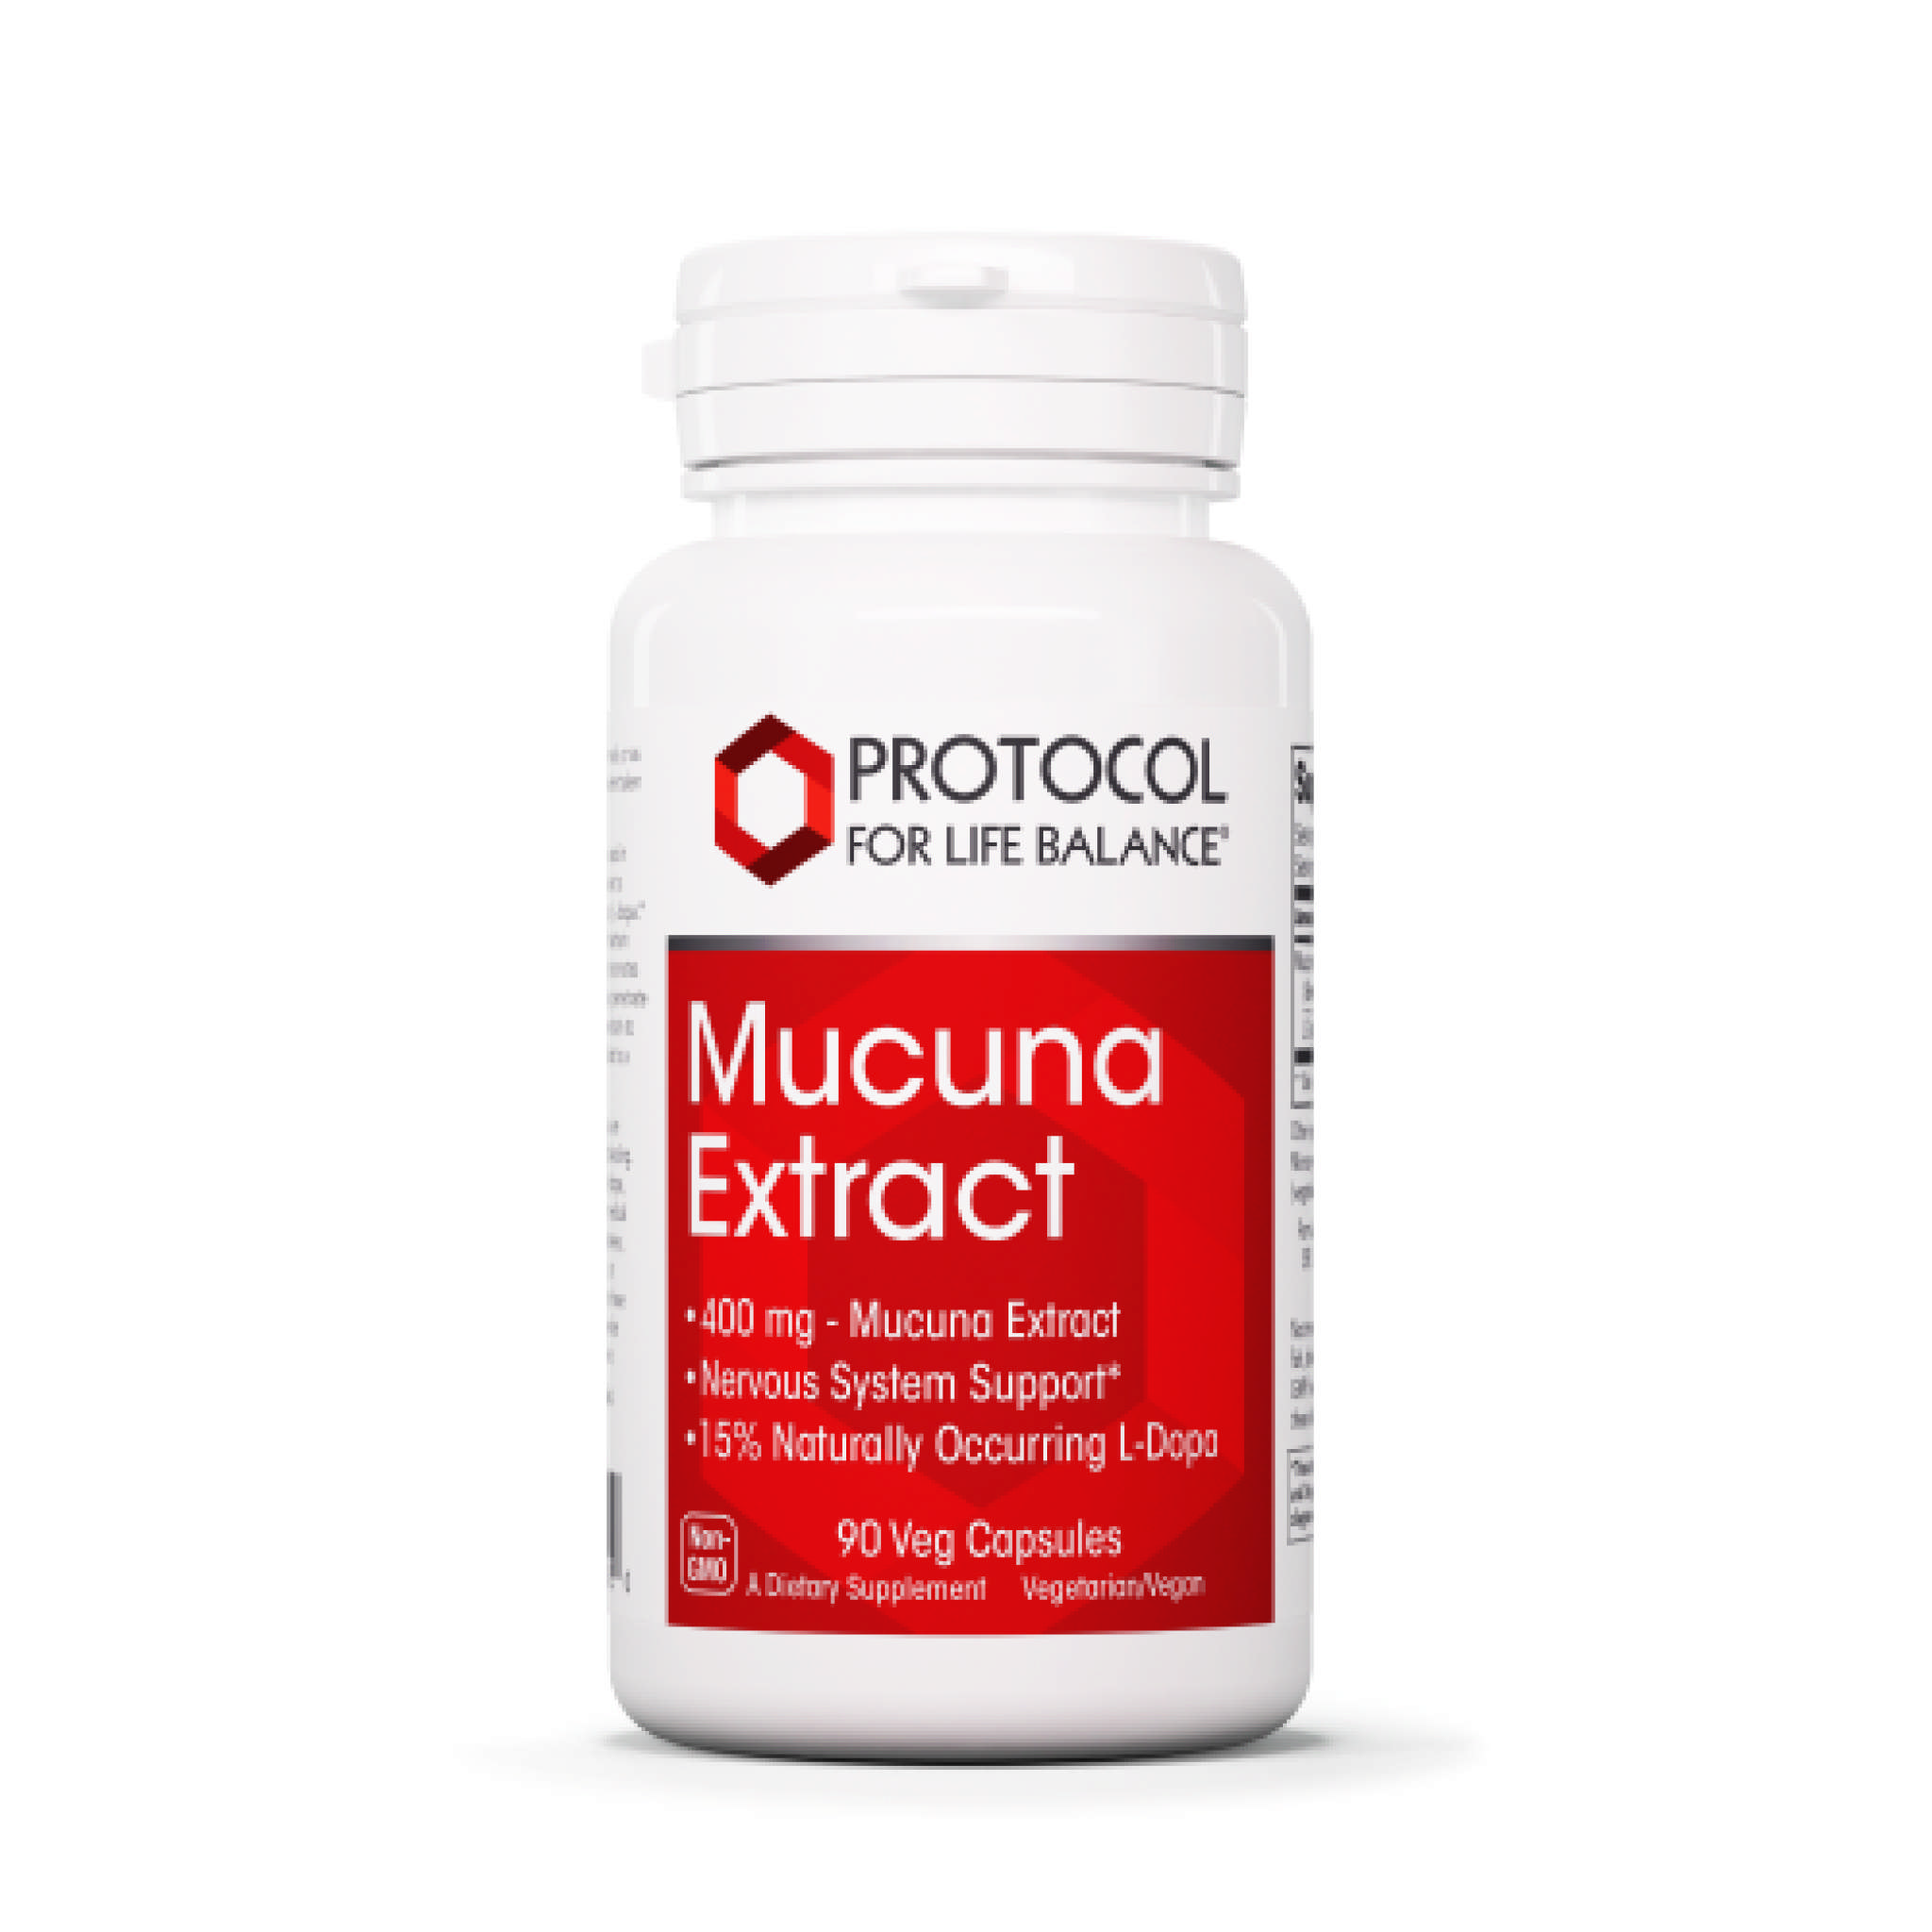 Protocol For Life Balance - Mucuna Extract